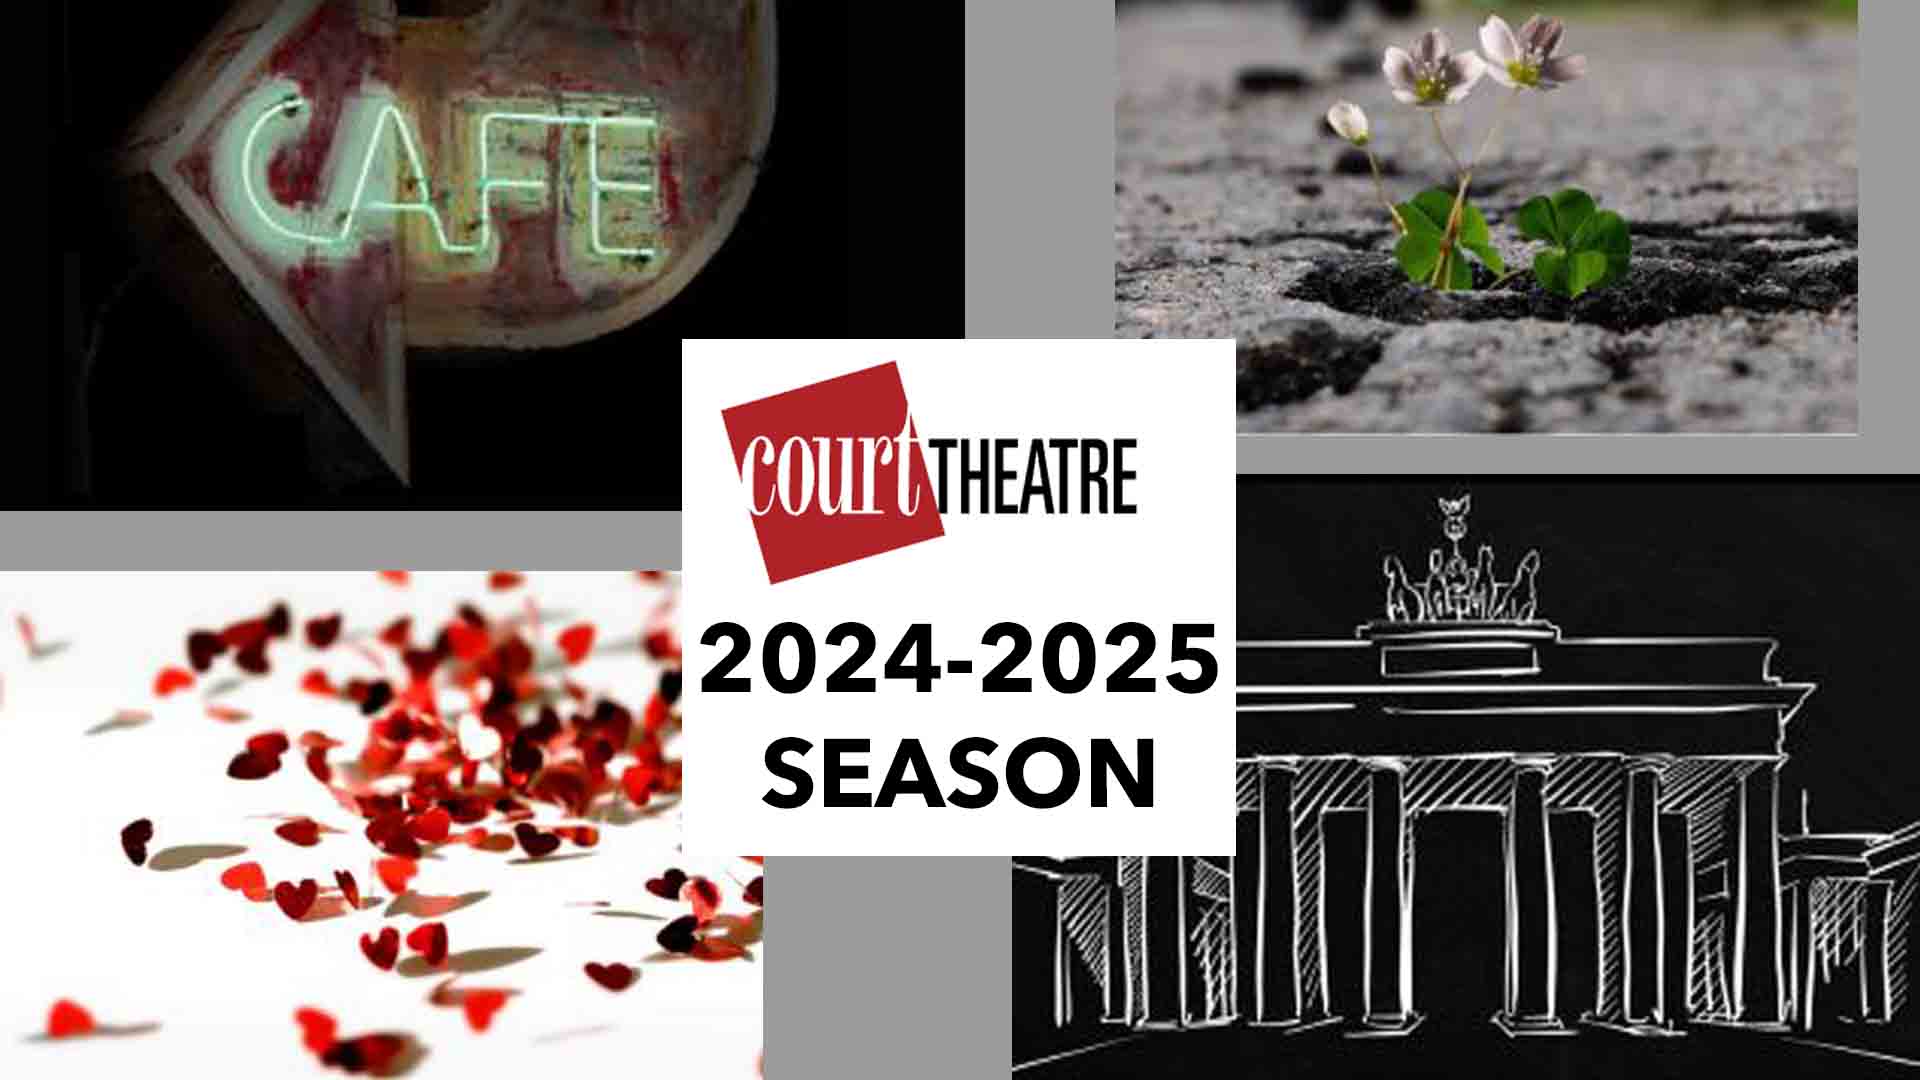 The Court Theatre's 2024-2025 Season